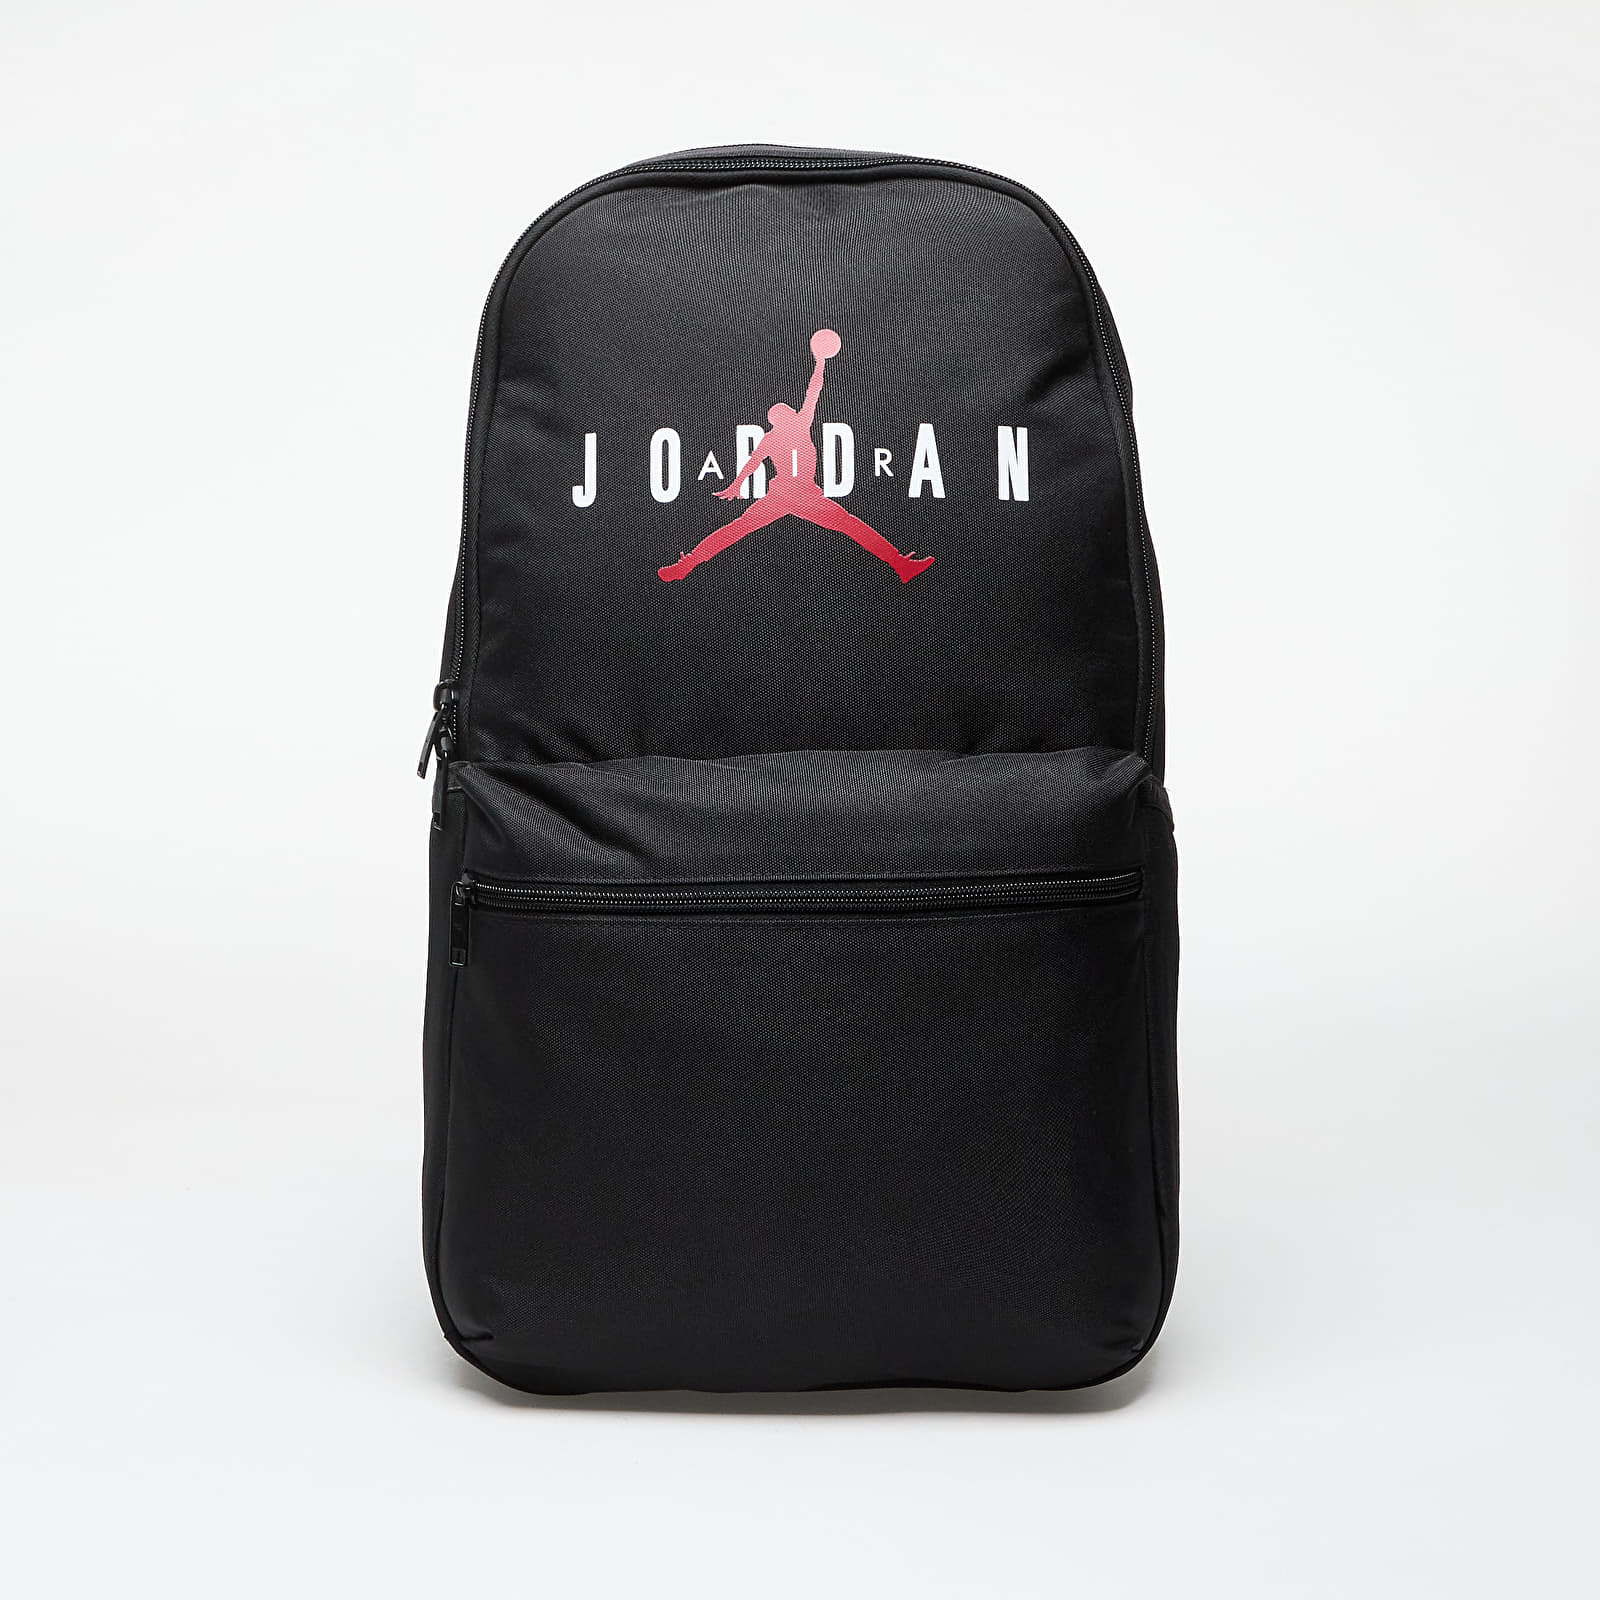 Backpacks Jordan Backpack Black